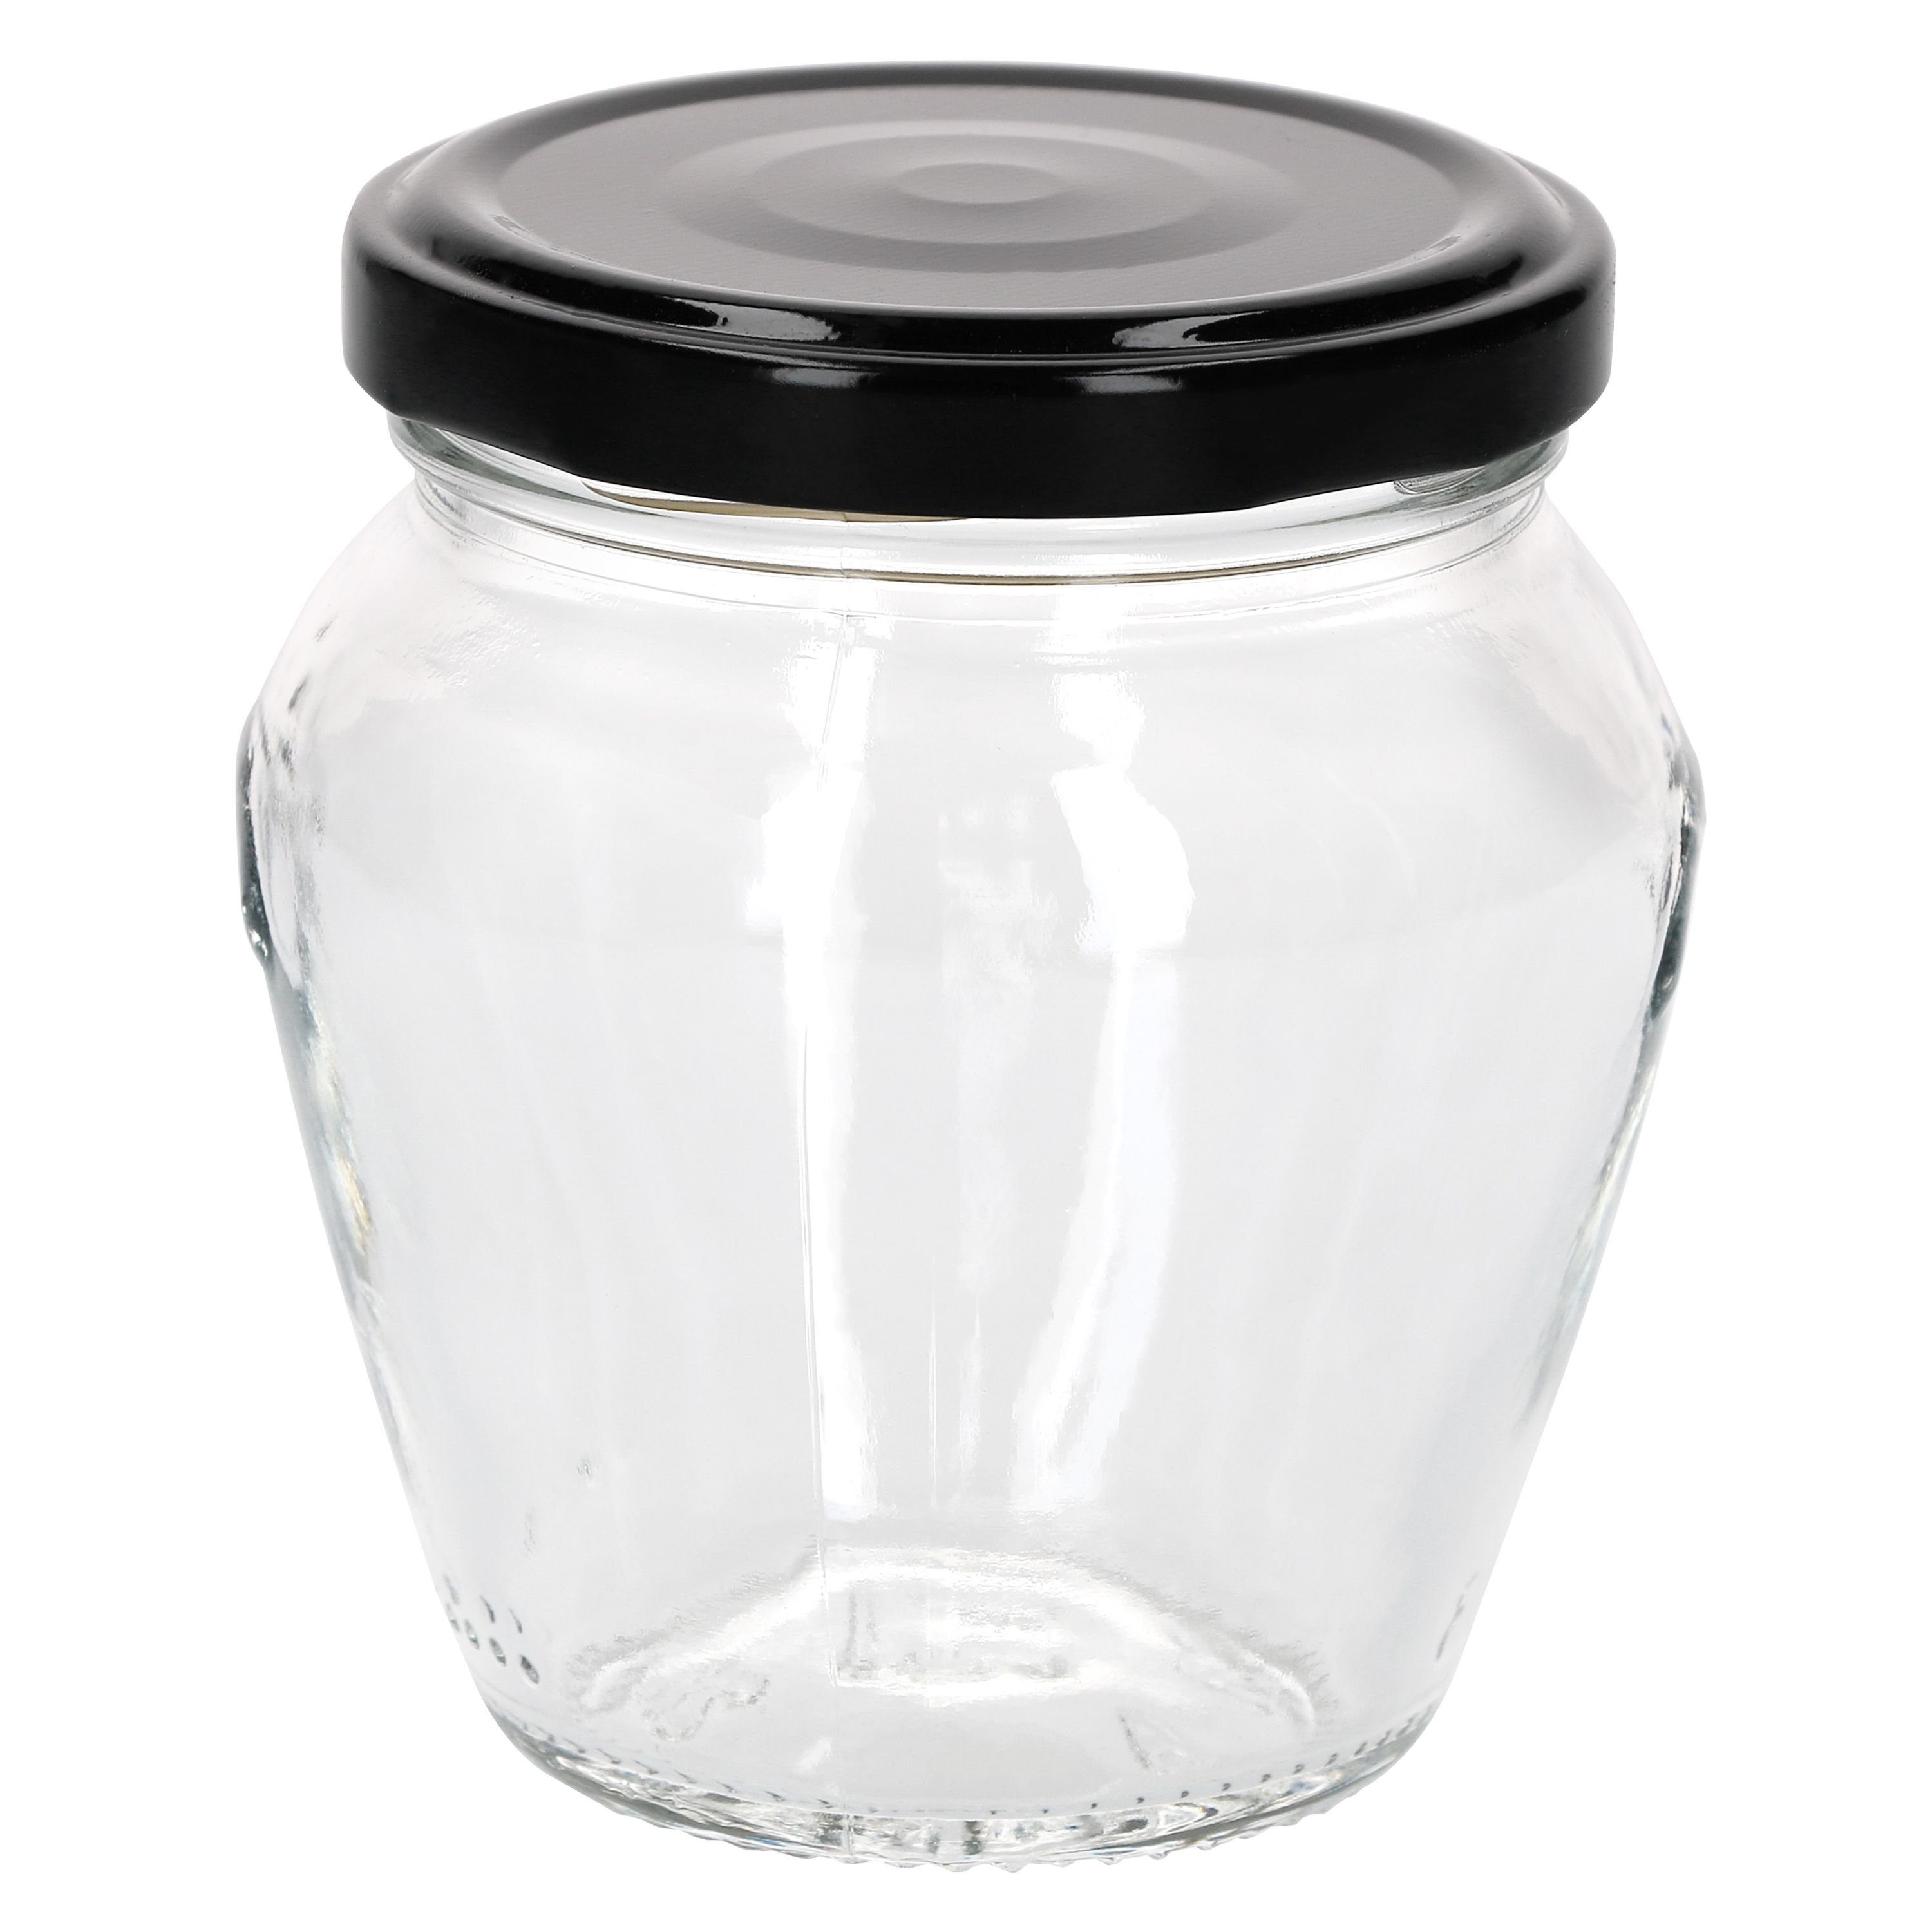 Vaso + 212ml Orcio 75er Glas MamboCat Vorratsglas Marmeladenglas Schwarz, To63 Set Deckel